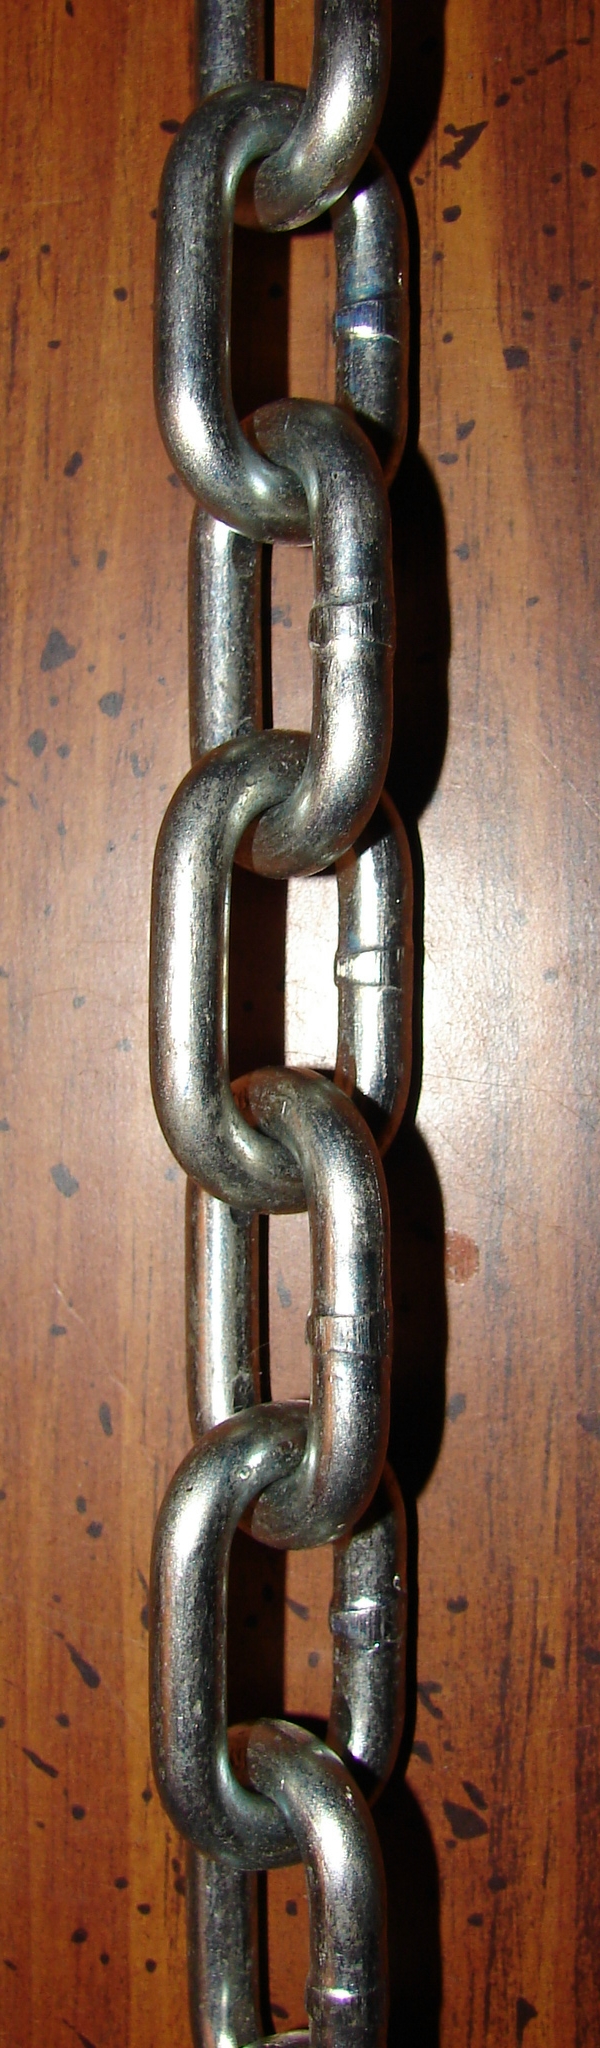 Steel Metal Chain 2